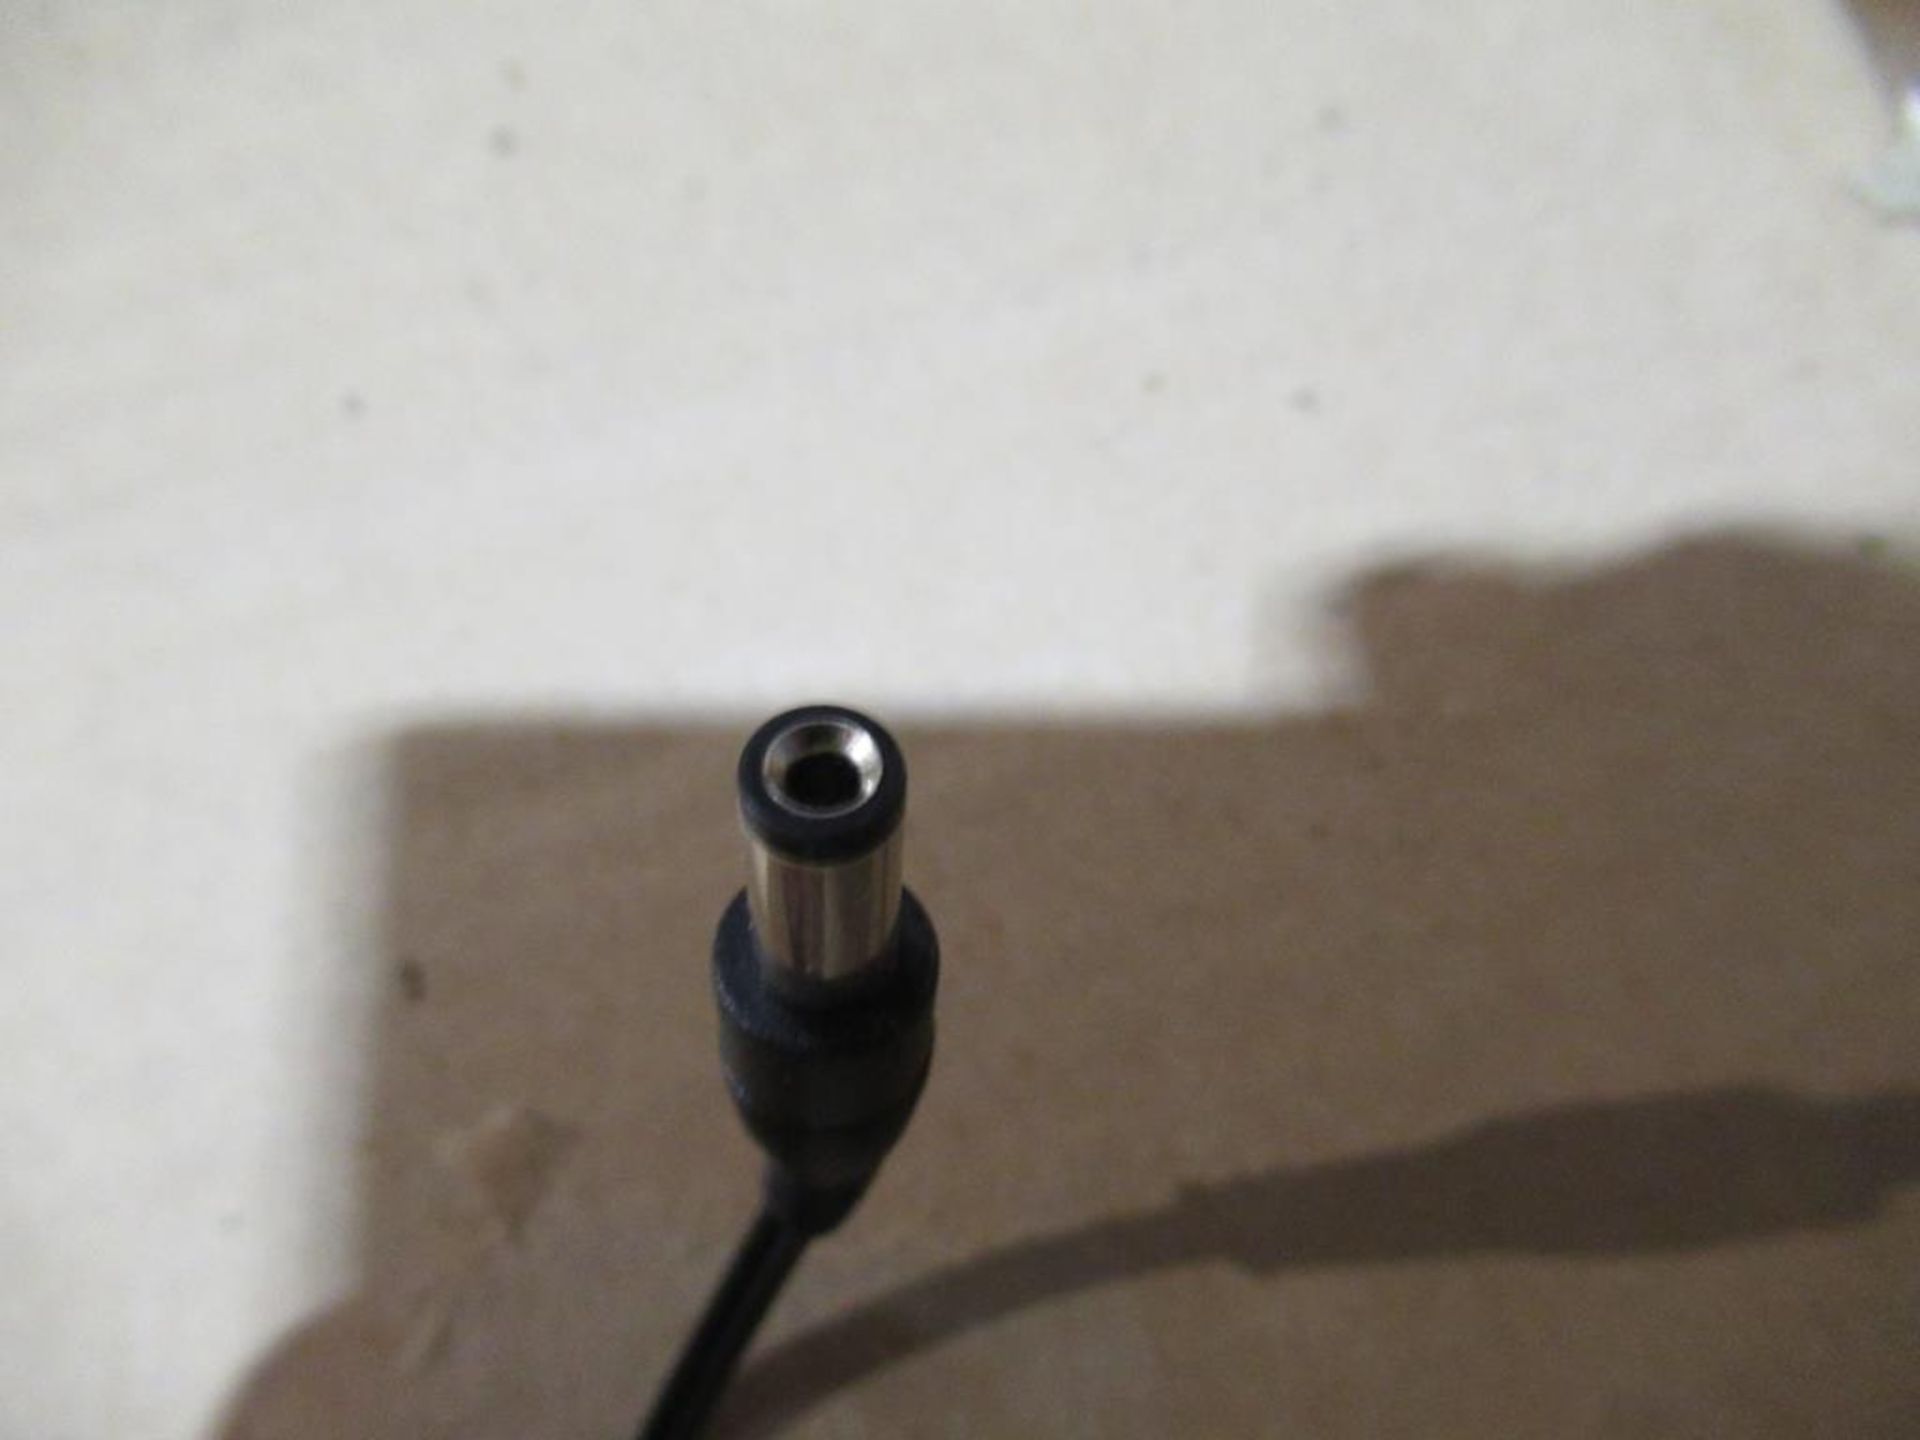 120x UK Linear Plug In Mains Adaptor 9V AC 500mA 2.1x5.5mm DC Powerplug. (OEM trade price £960.00) - Image 4 of 4